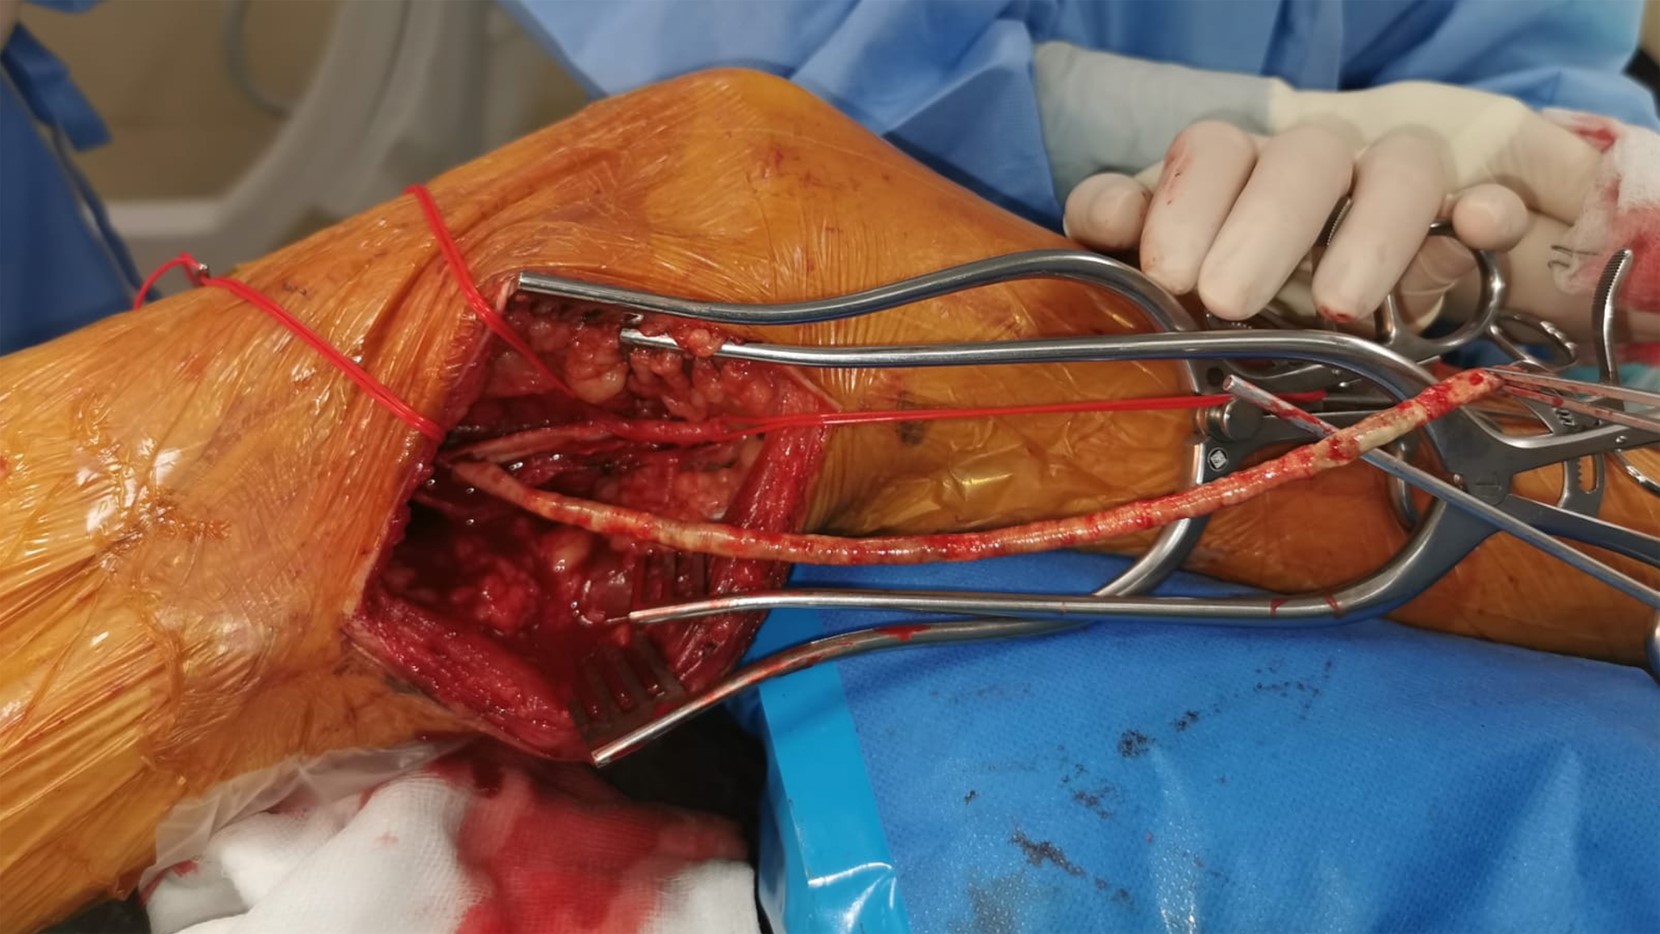 endarterectomy